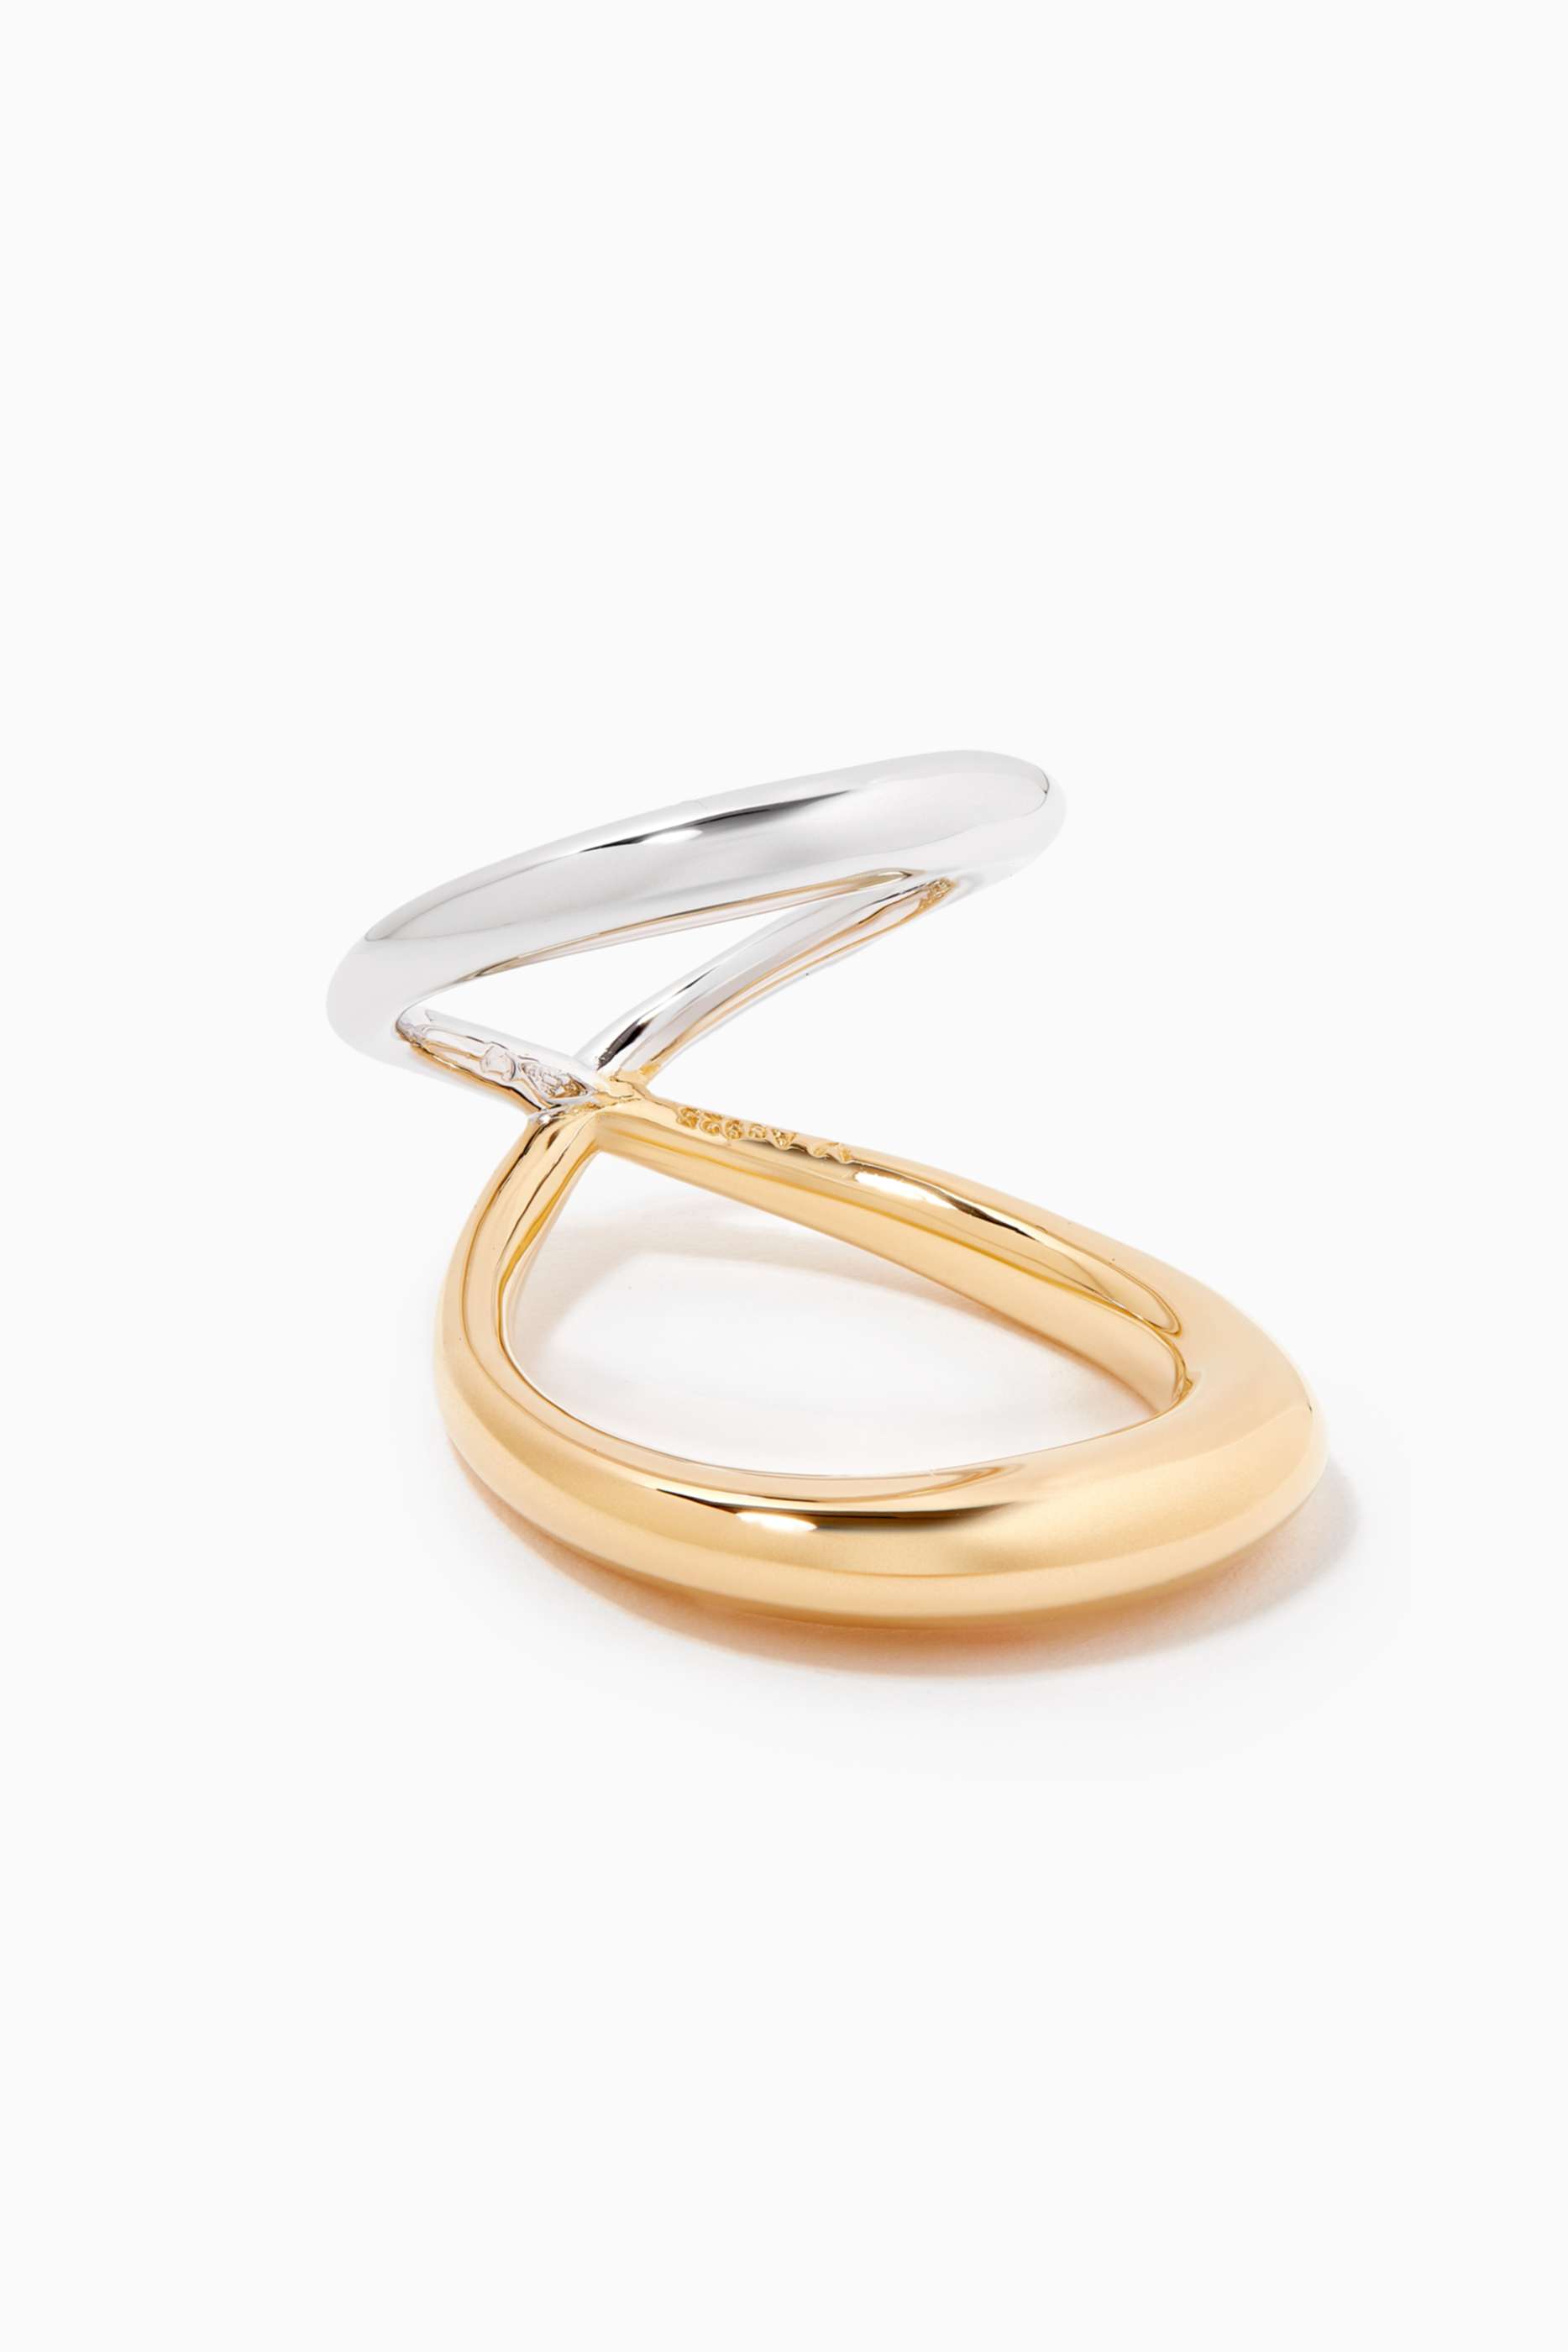 Shop Charlotte Chesnais Multicolour Surma Ring in 18kt Vermeil for 